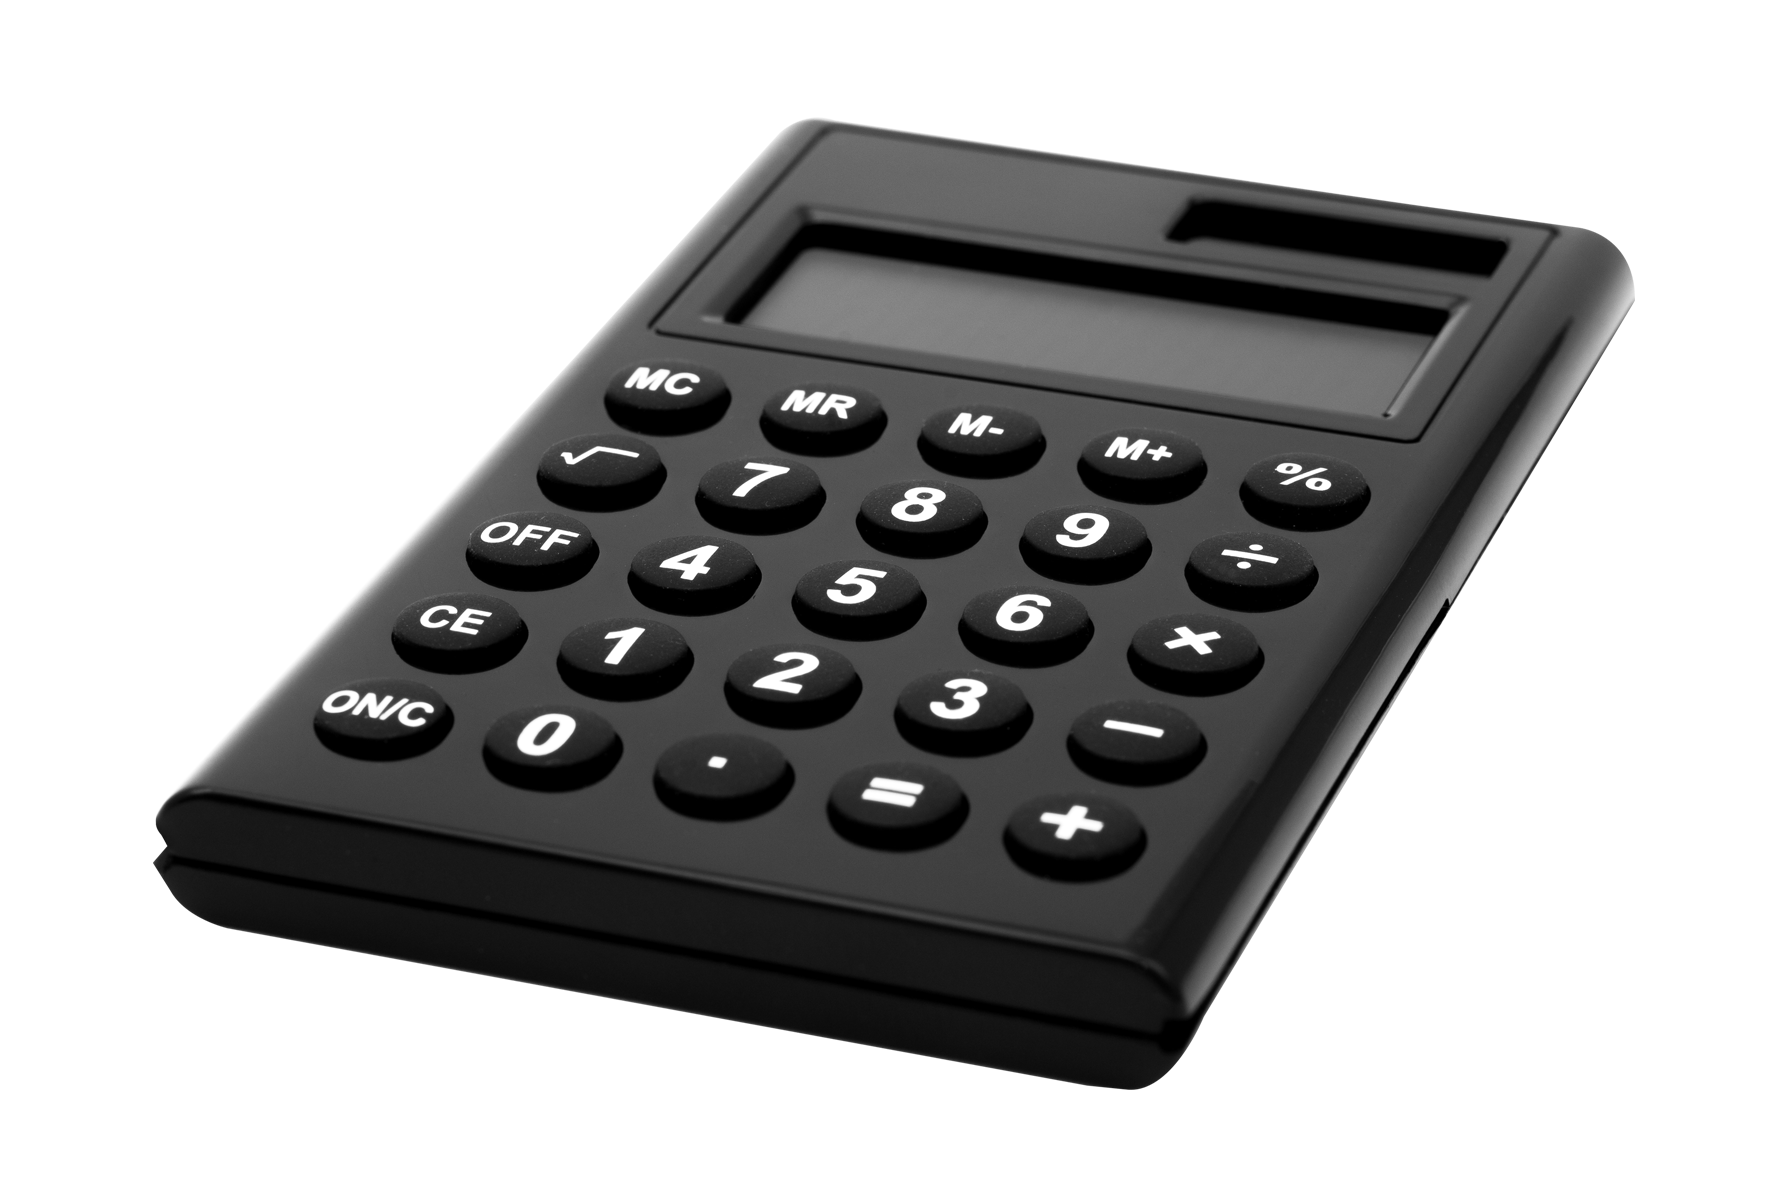 Calculator PNG - 17755